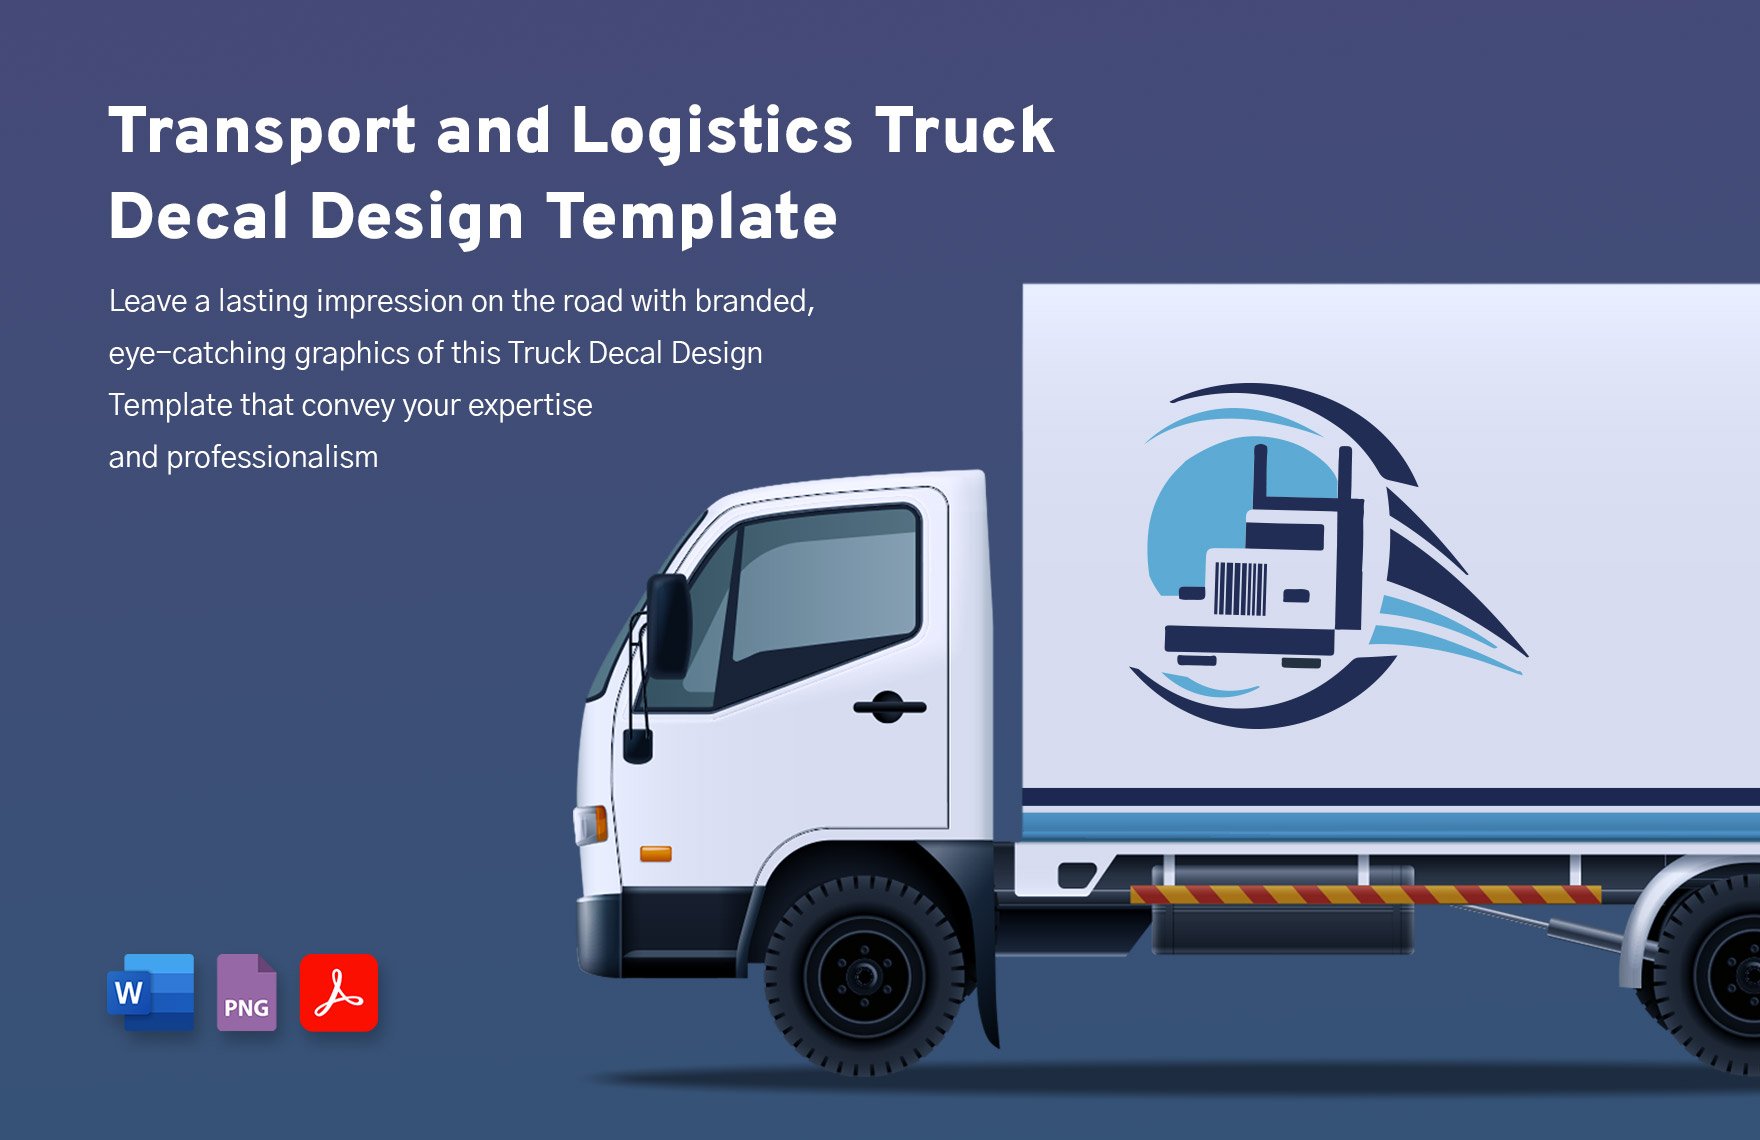 Transport and Logistics Truck Decal Design Template